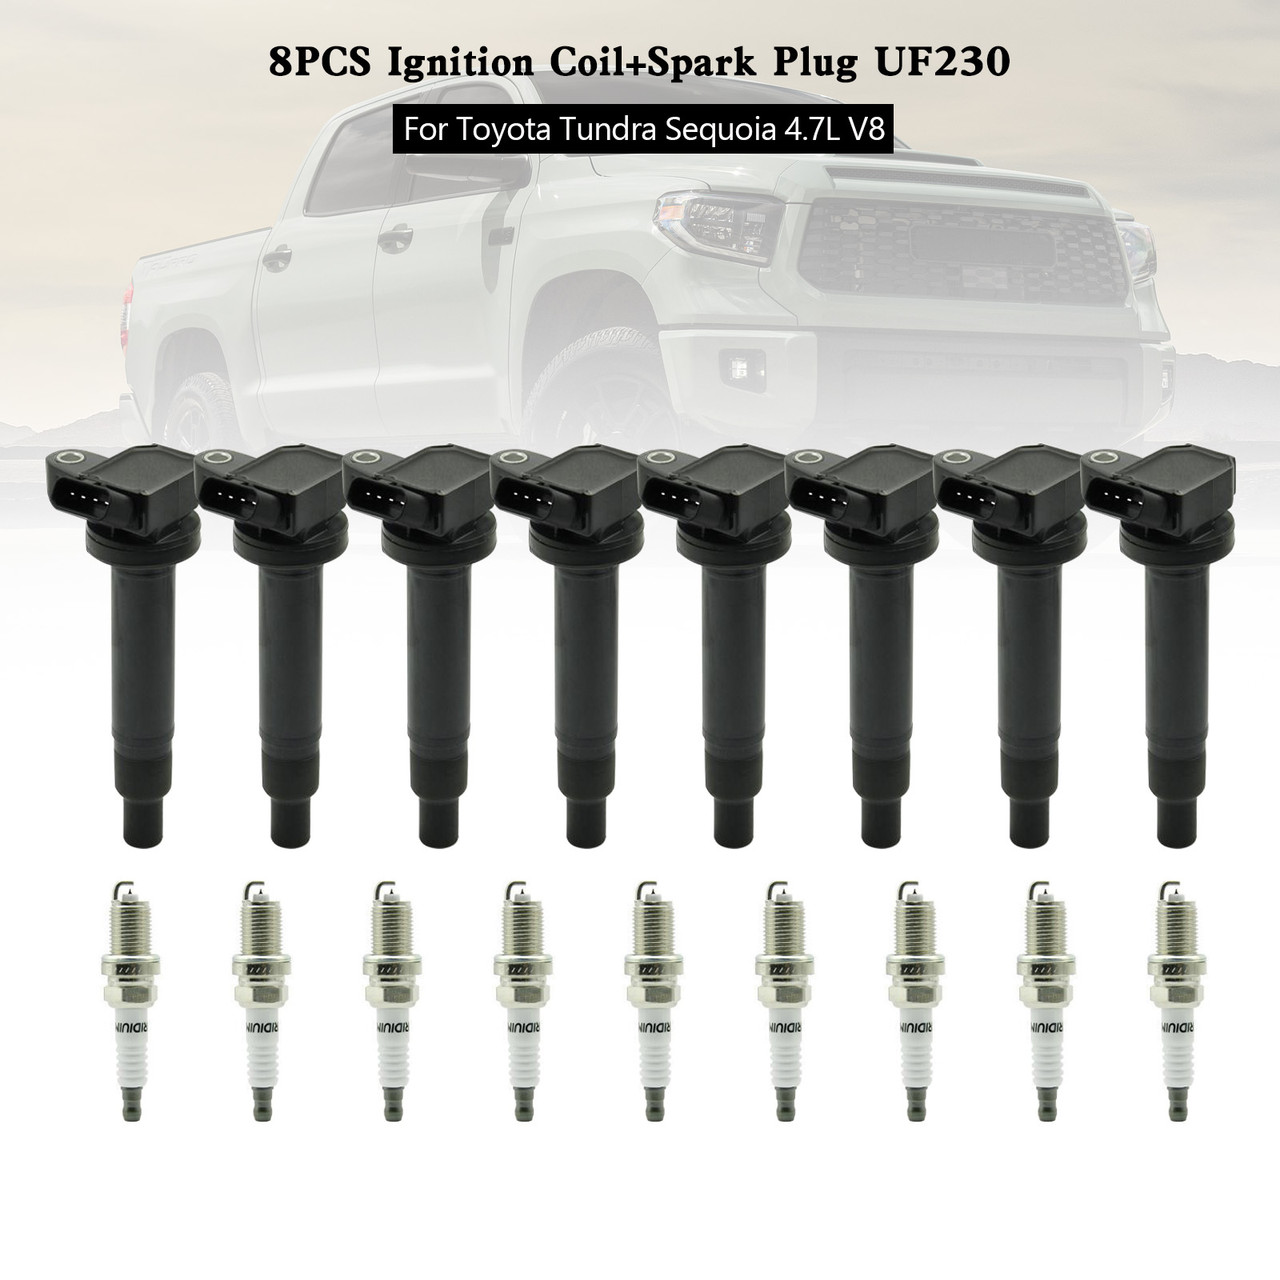 8PCS Ignition Coil+Spark Plug UF230 For Toyota Tundra Sequoia 4.7L V8